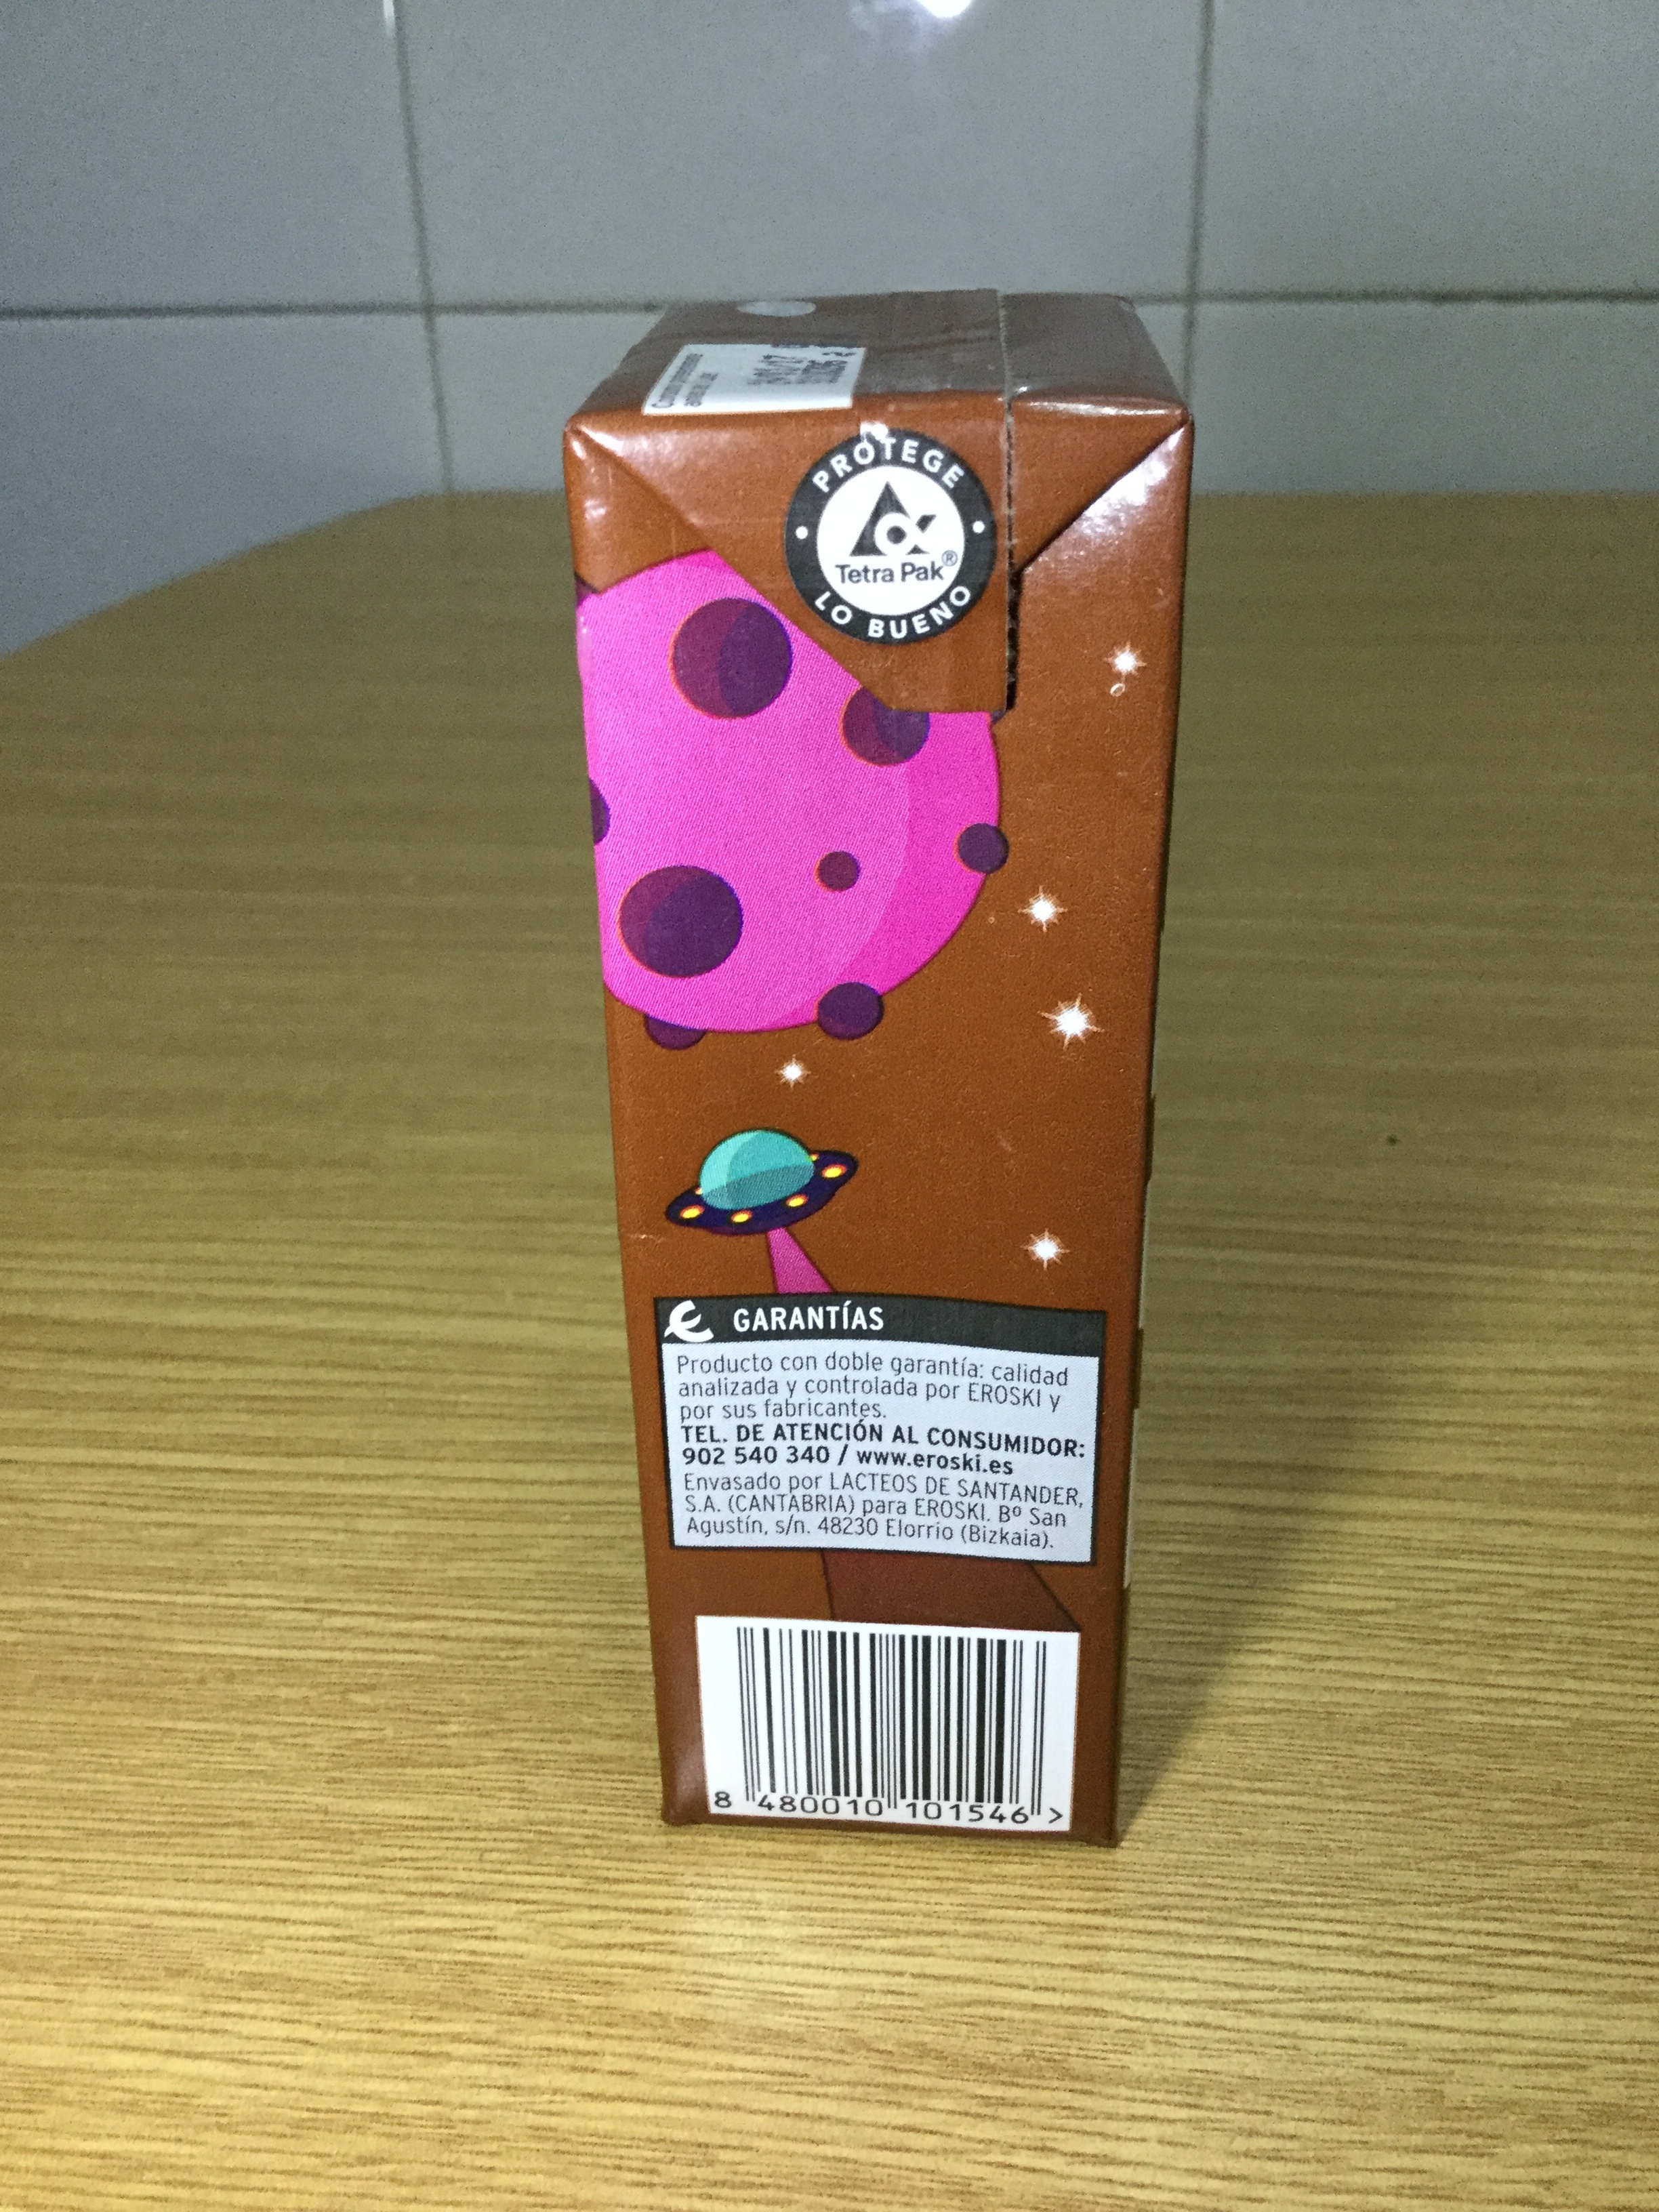 Hacendado Batido De Chocolate — Chocolate Milk Reviews